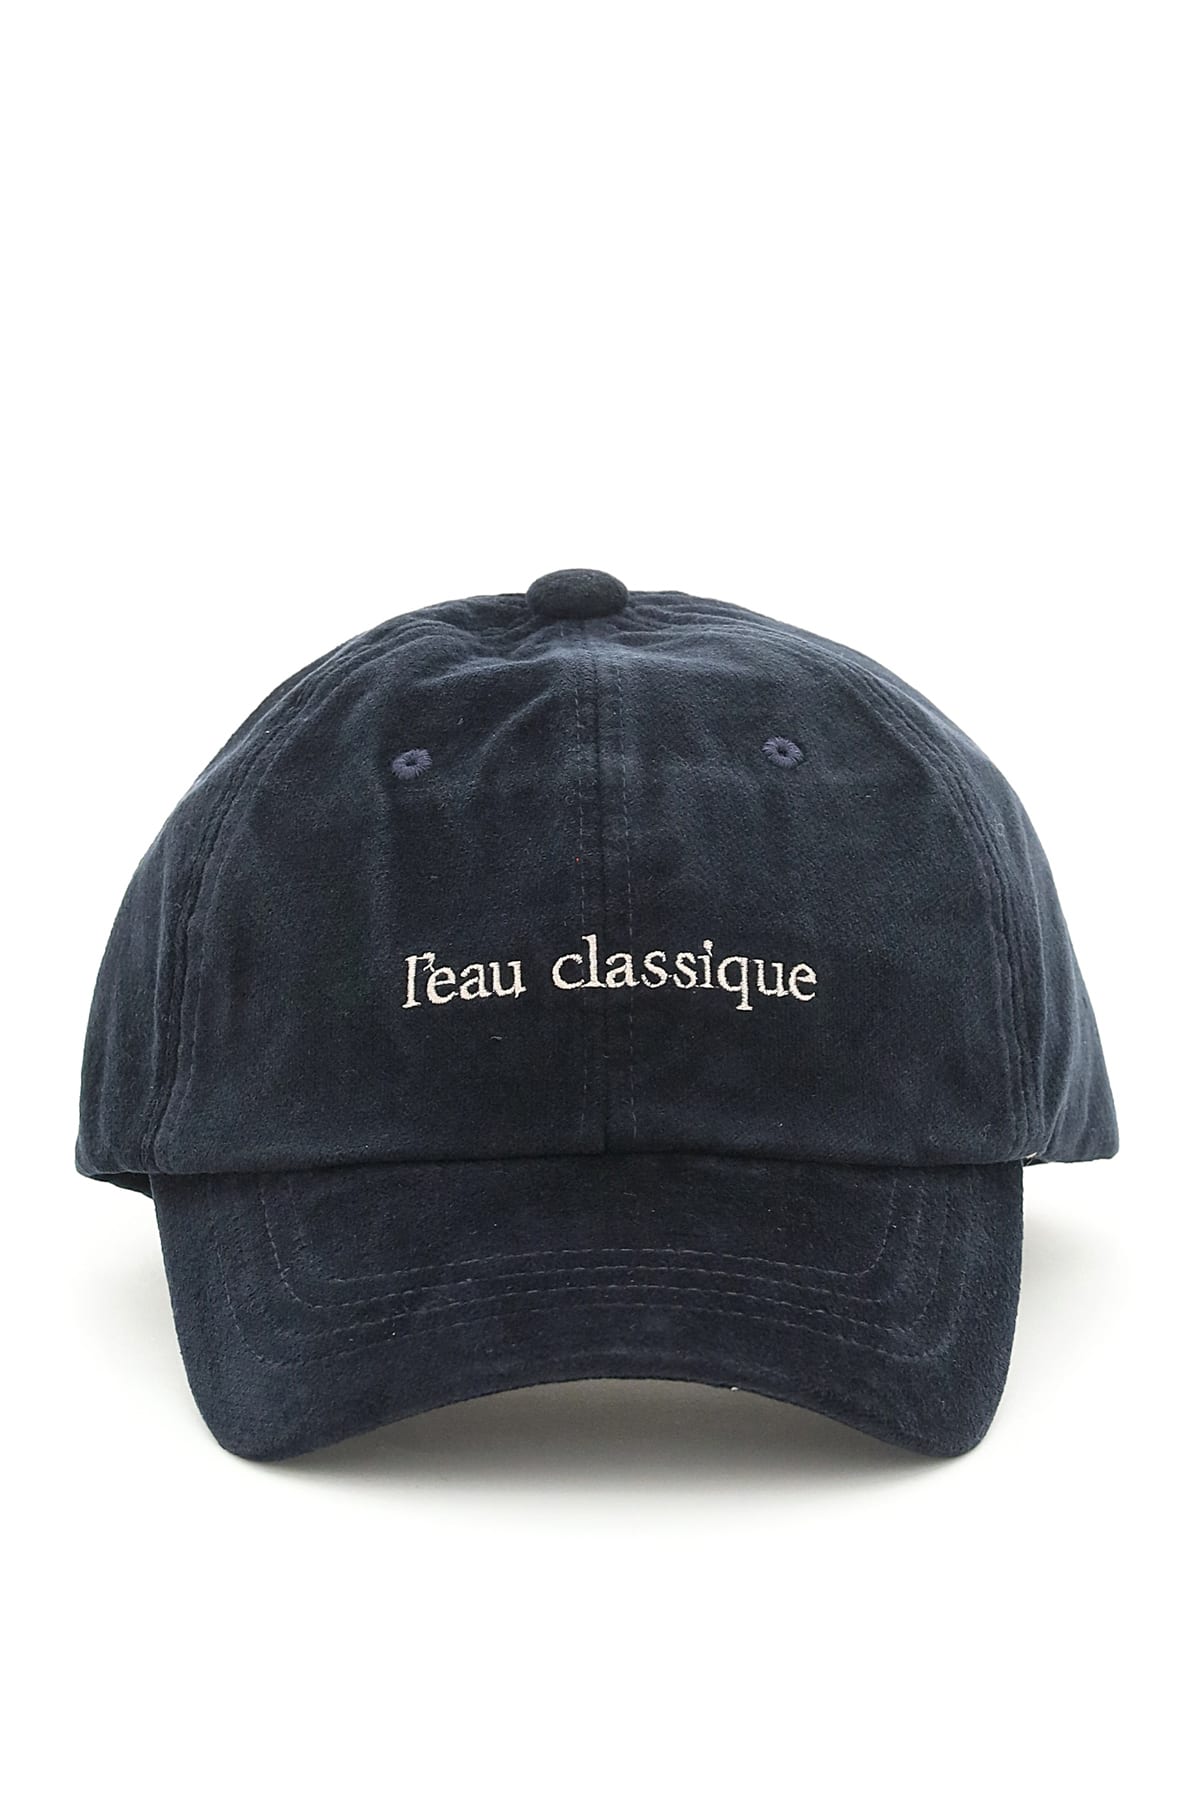 Low Classic Leau Classique Baseball Hat